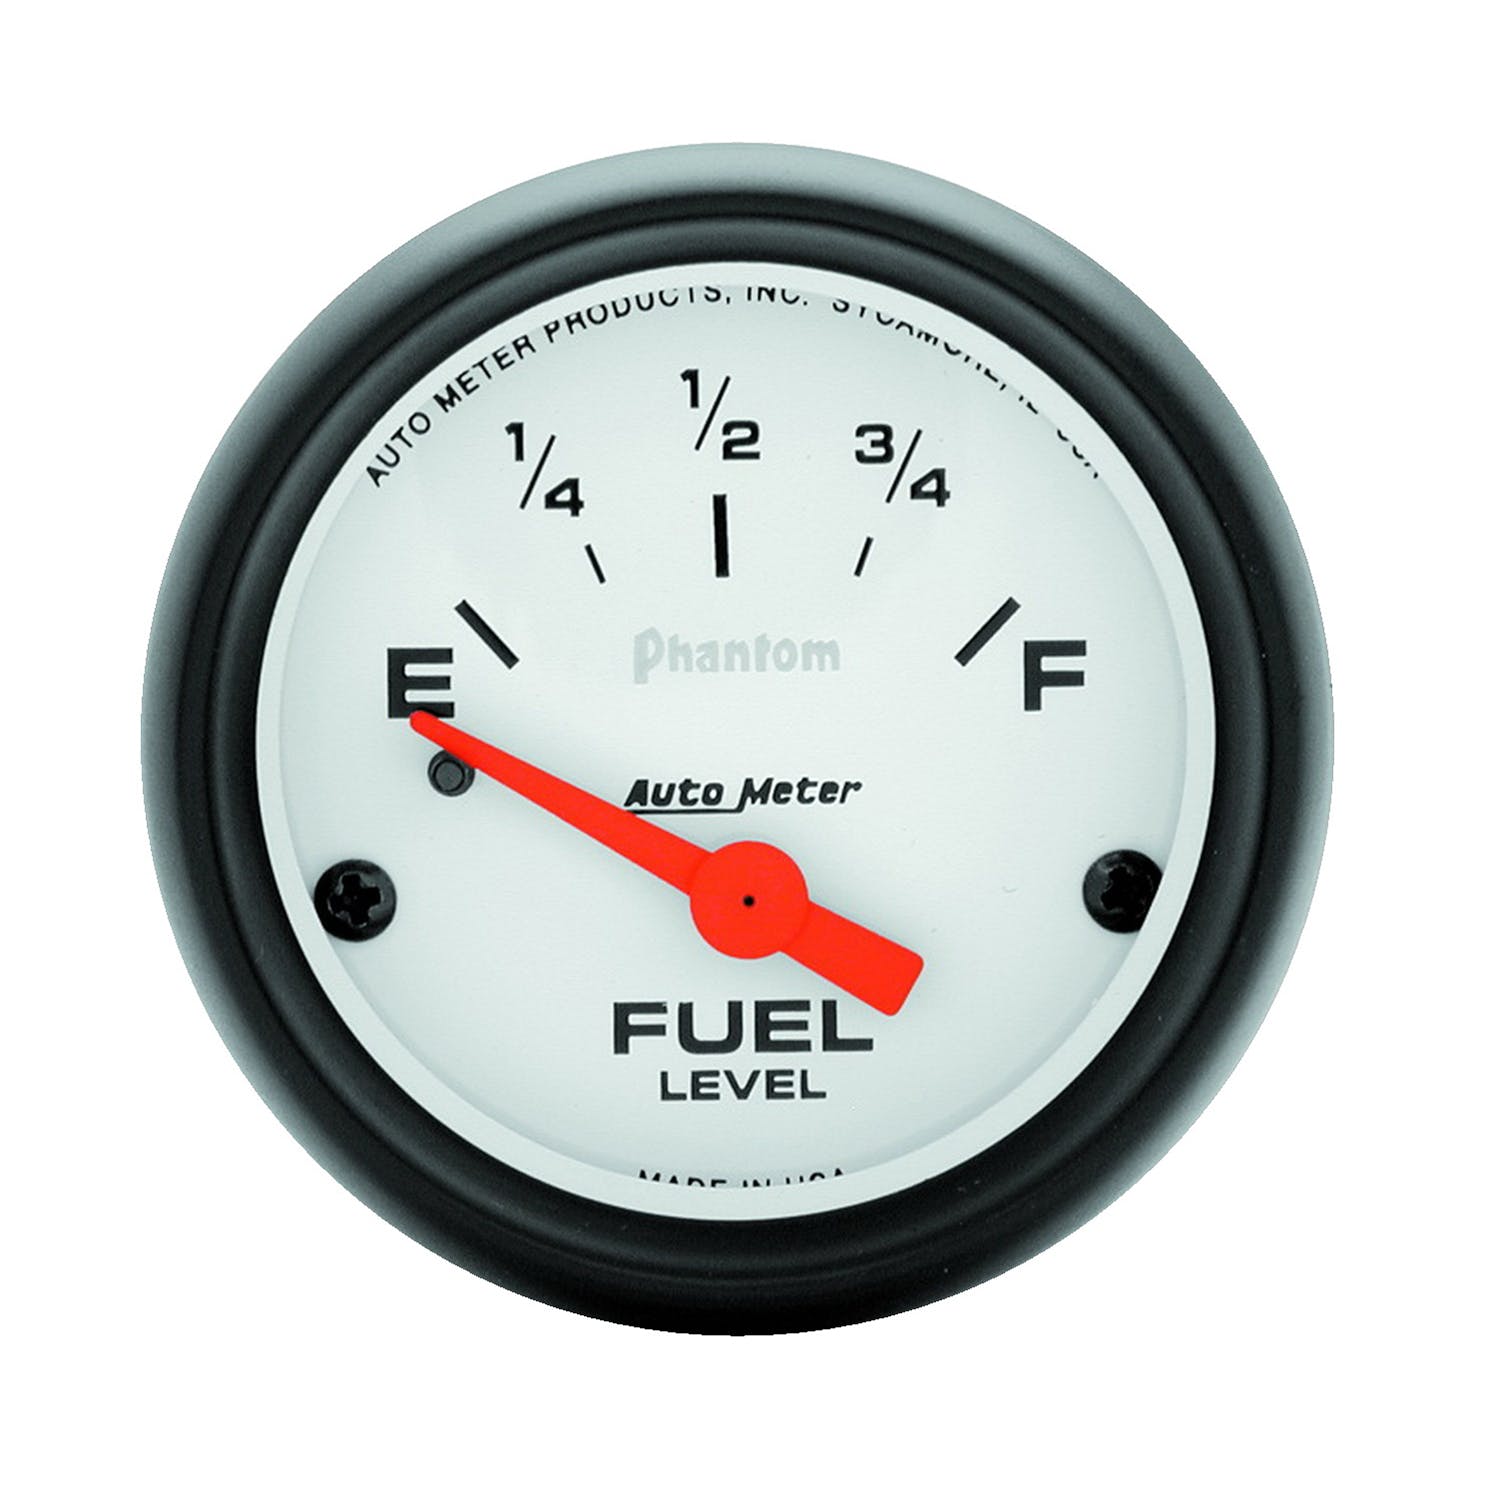 AutoMeter Products 5716 Fuel Level Gauge 240 ohm E/33 ohm F